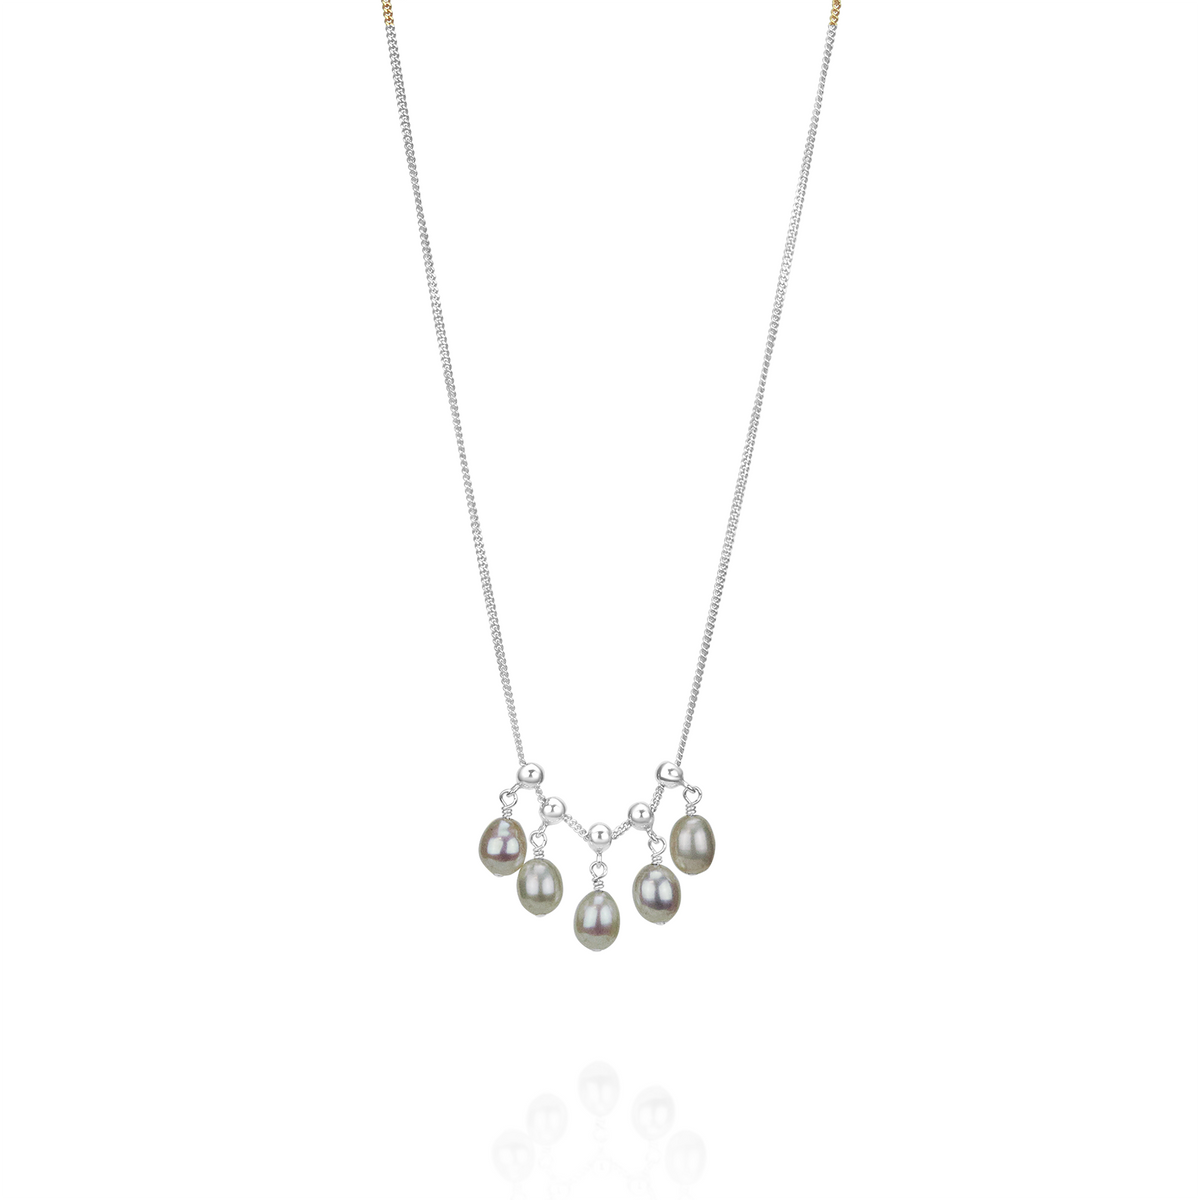 Delicate Adjustable Pearl Necklace